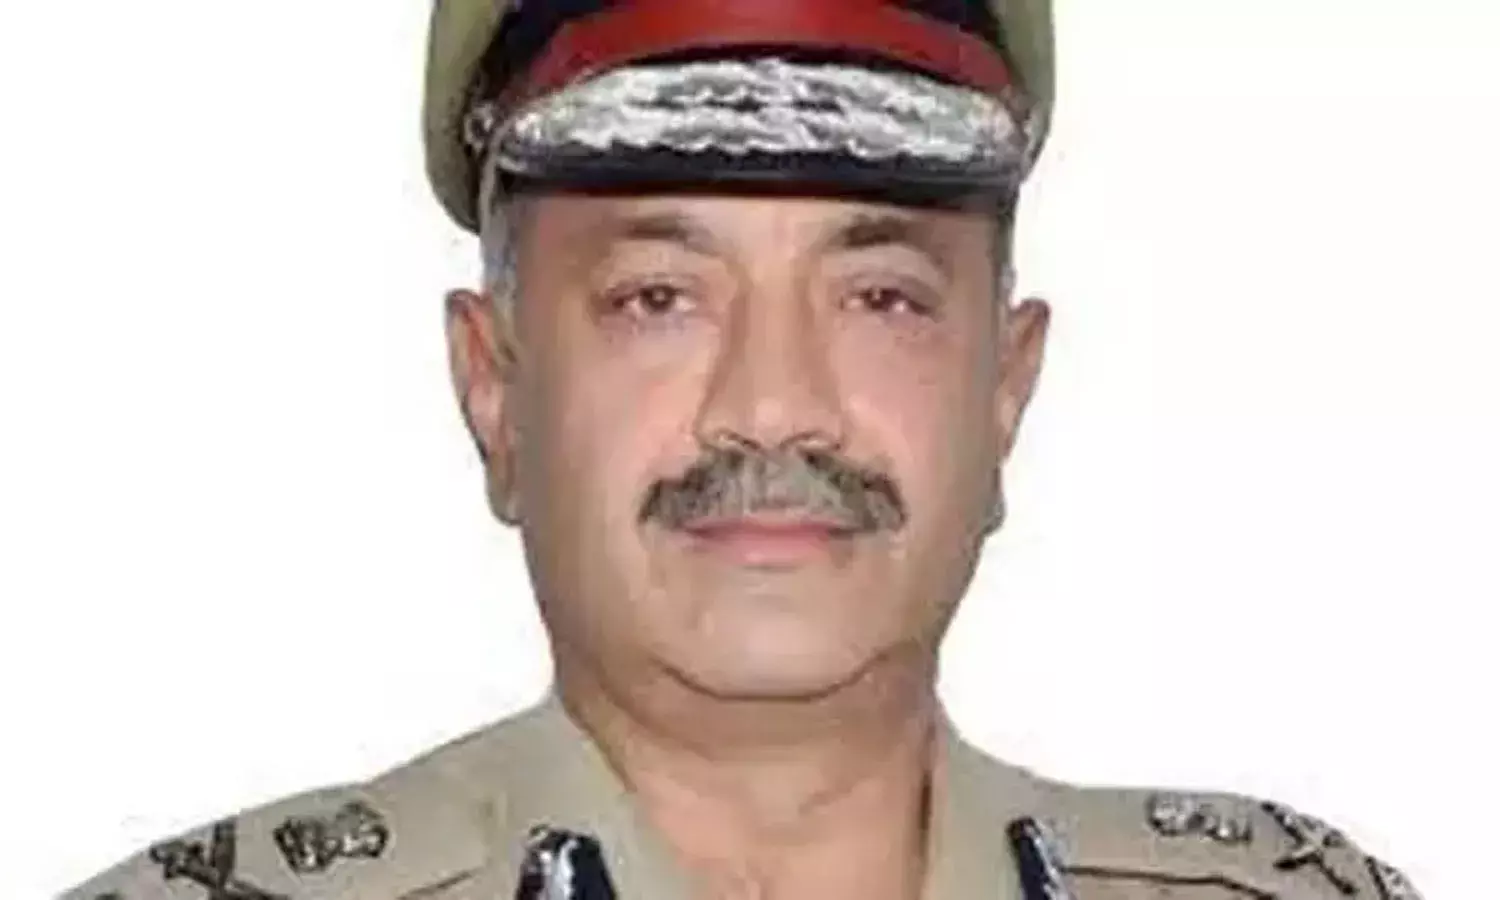 Punjab New DGP । Punjab ka naya dgp kaun hai । Sidharth Chattopadhyaya  ।Director-General of Police । Iqbal Preet Sahota | Punjab New DGP: कौन है  पंजाब का नया डीजीपी, जानें नए